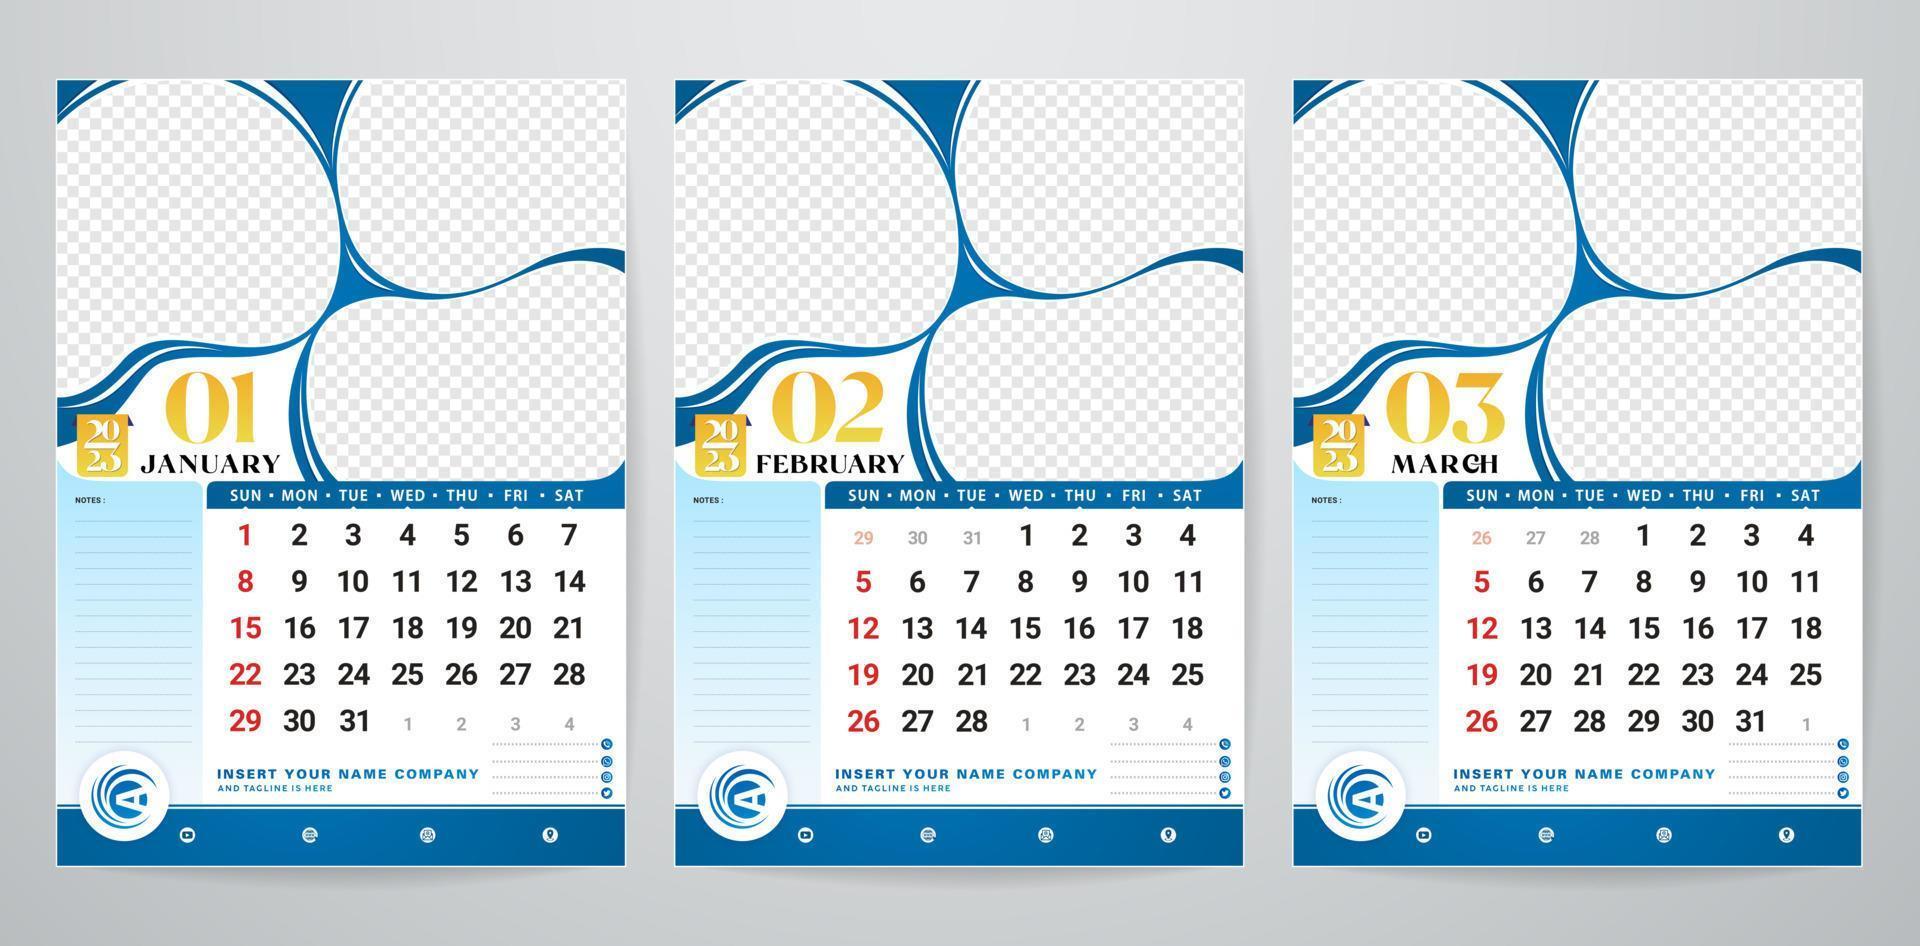 vektorillustration von 2023 kalendervorlagen konzepte dritte monate für büroplaner, corporate design planervorlage. Veranstaltungskalenderkonzepte, minimaler Projektkatalog, druckfertig vektor